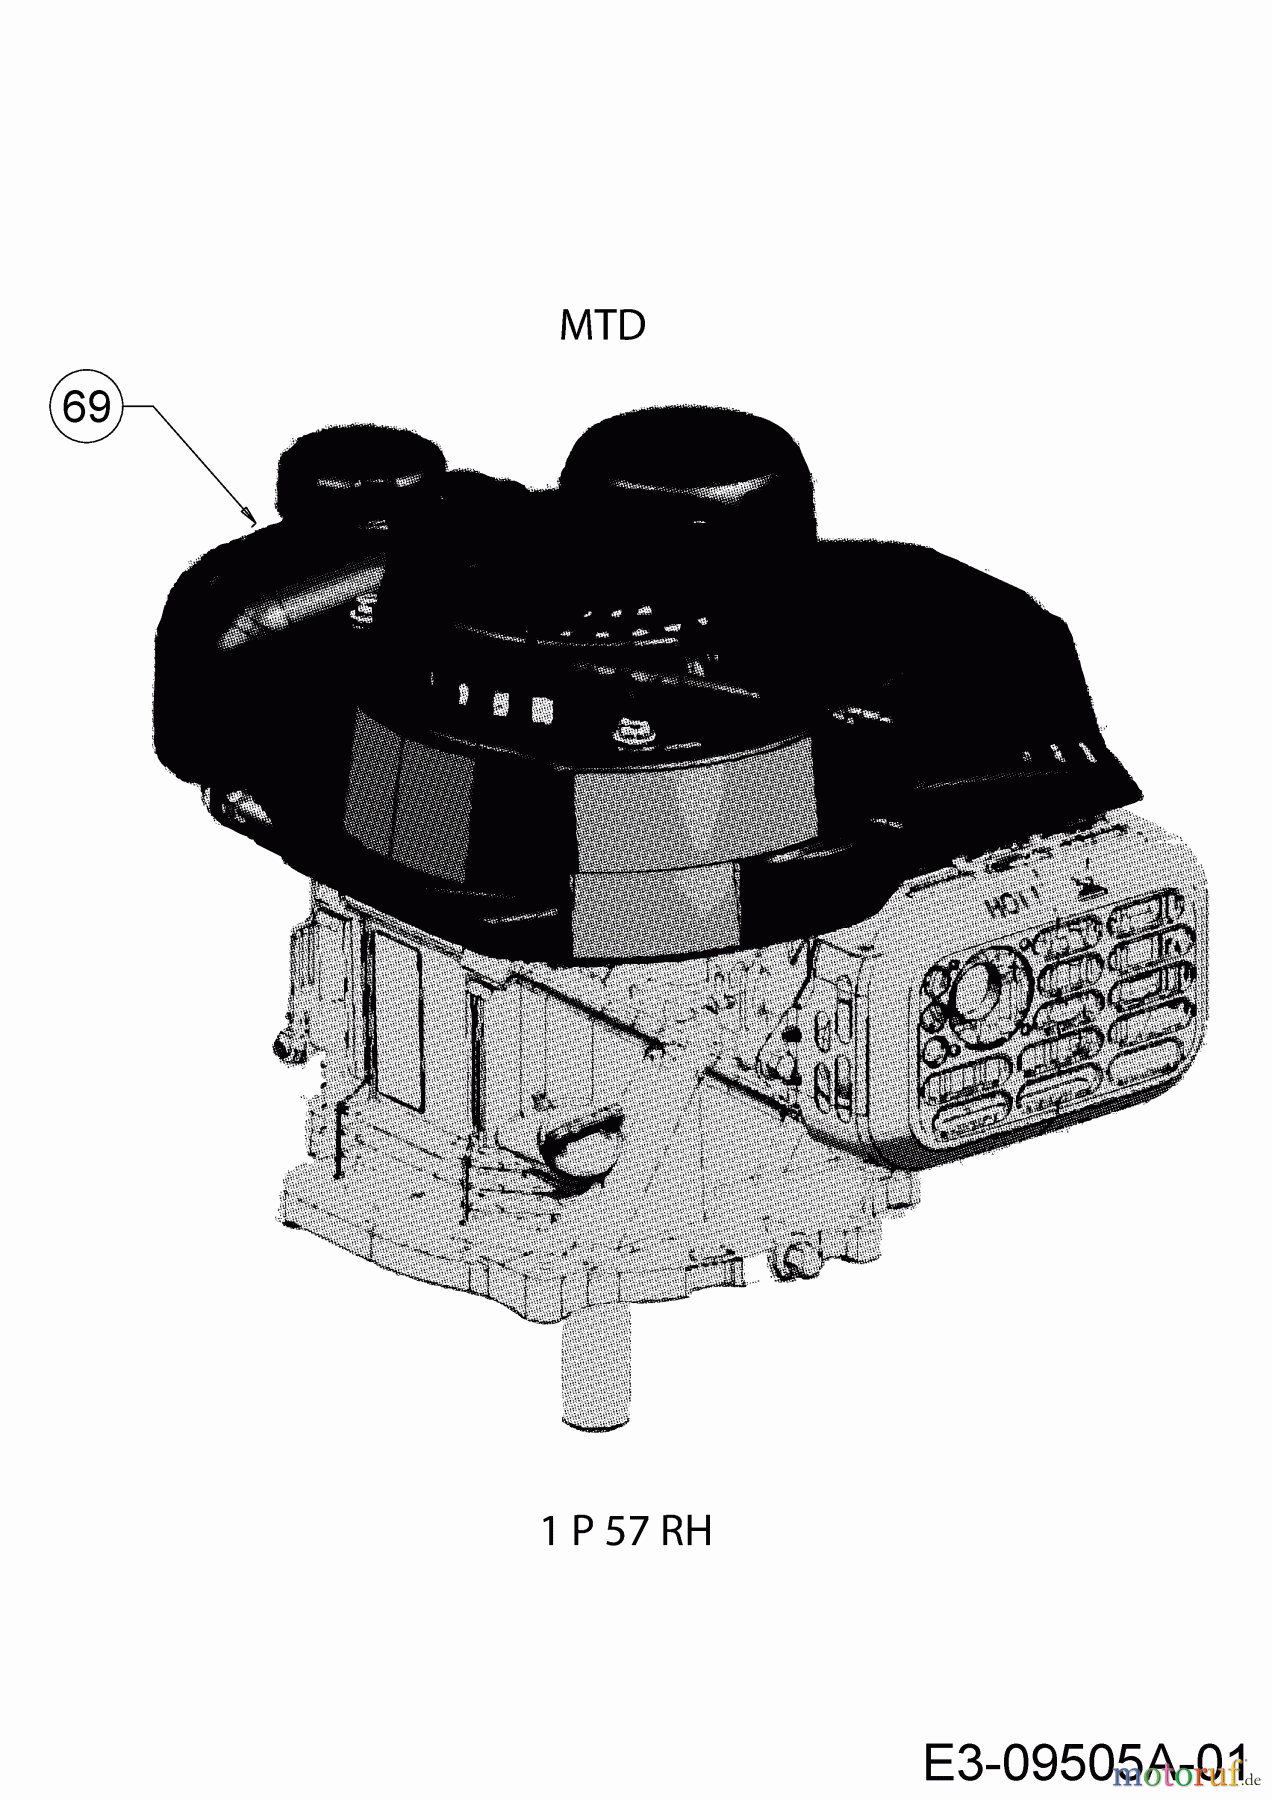  MTD Petrol mower self propelled DL 460 S 12A-TCSJ677  (2017) Engine MTD